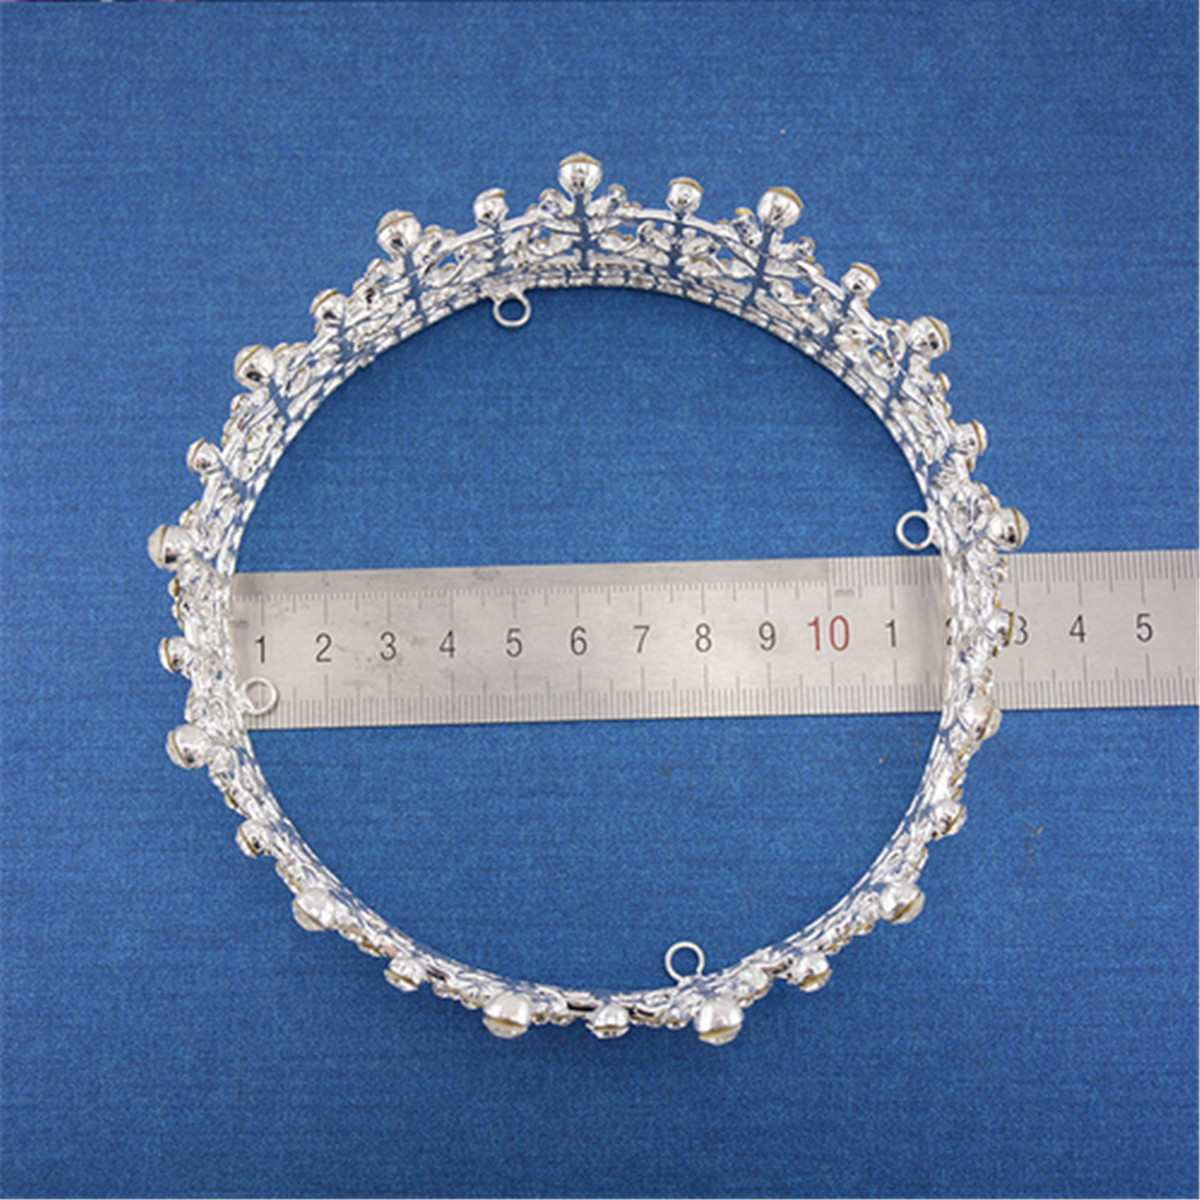 Bride-Crystal-Rhinestone-Crown-Wedding-Bridal-Headbrand-Queen-Tiara-Hair-Accessories-1118391